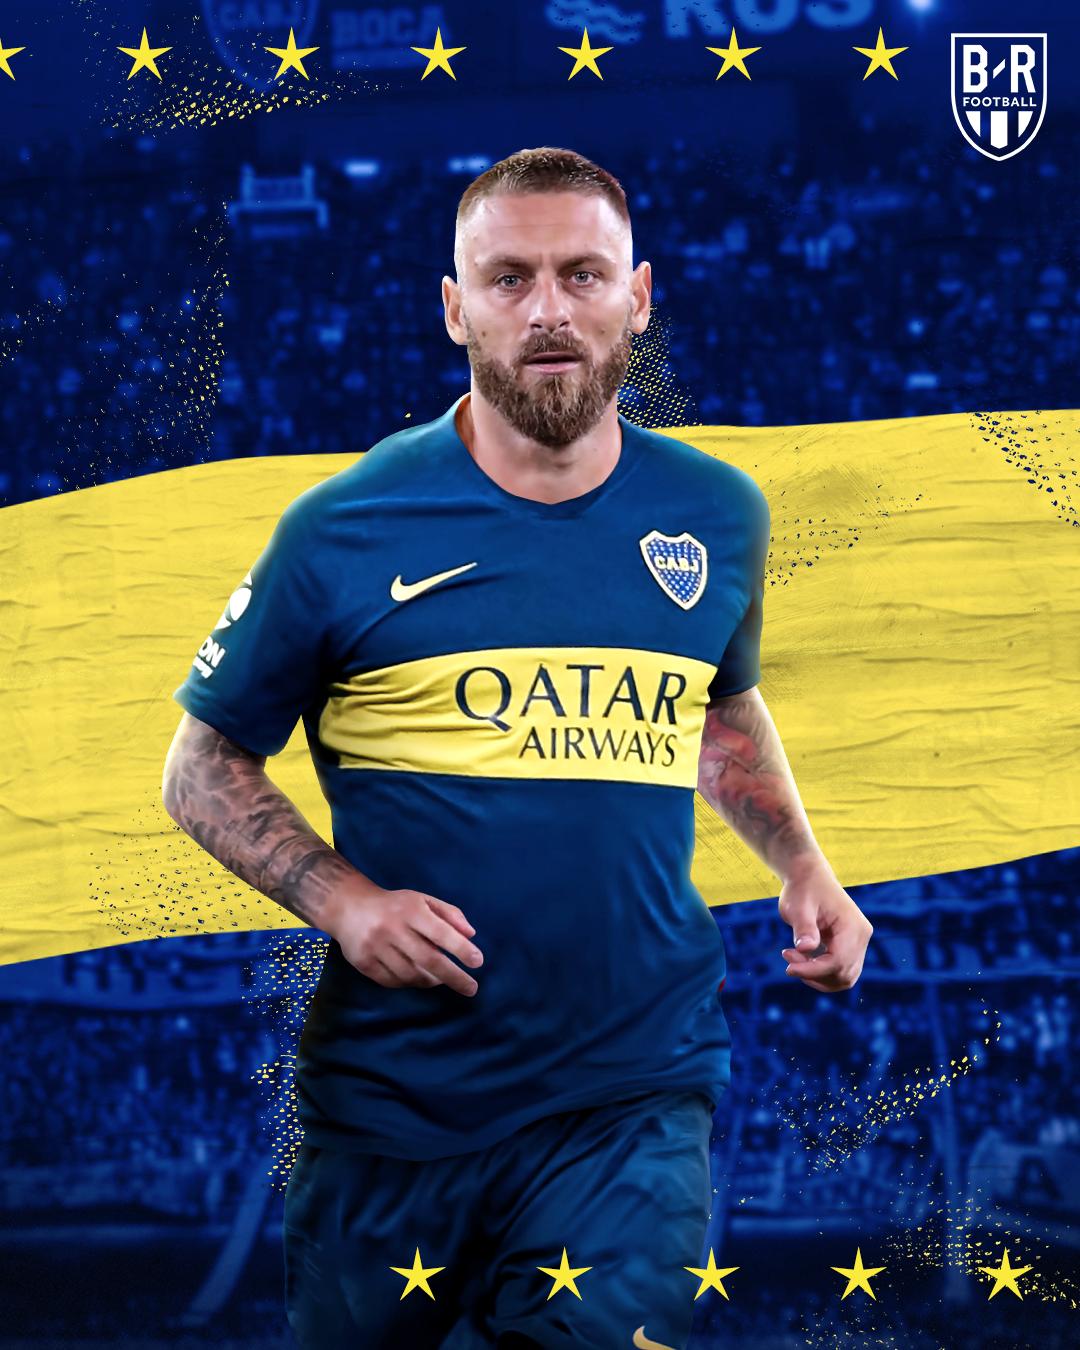 B/R Football on Twitter: "OFFICIAL: Daniele De Rossi is a Boca Juniors  player! 💙💛 https://t.co/8oEWSJzzRy" / Twitter